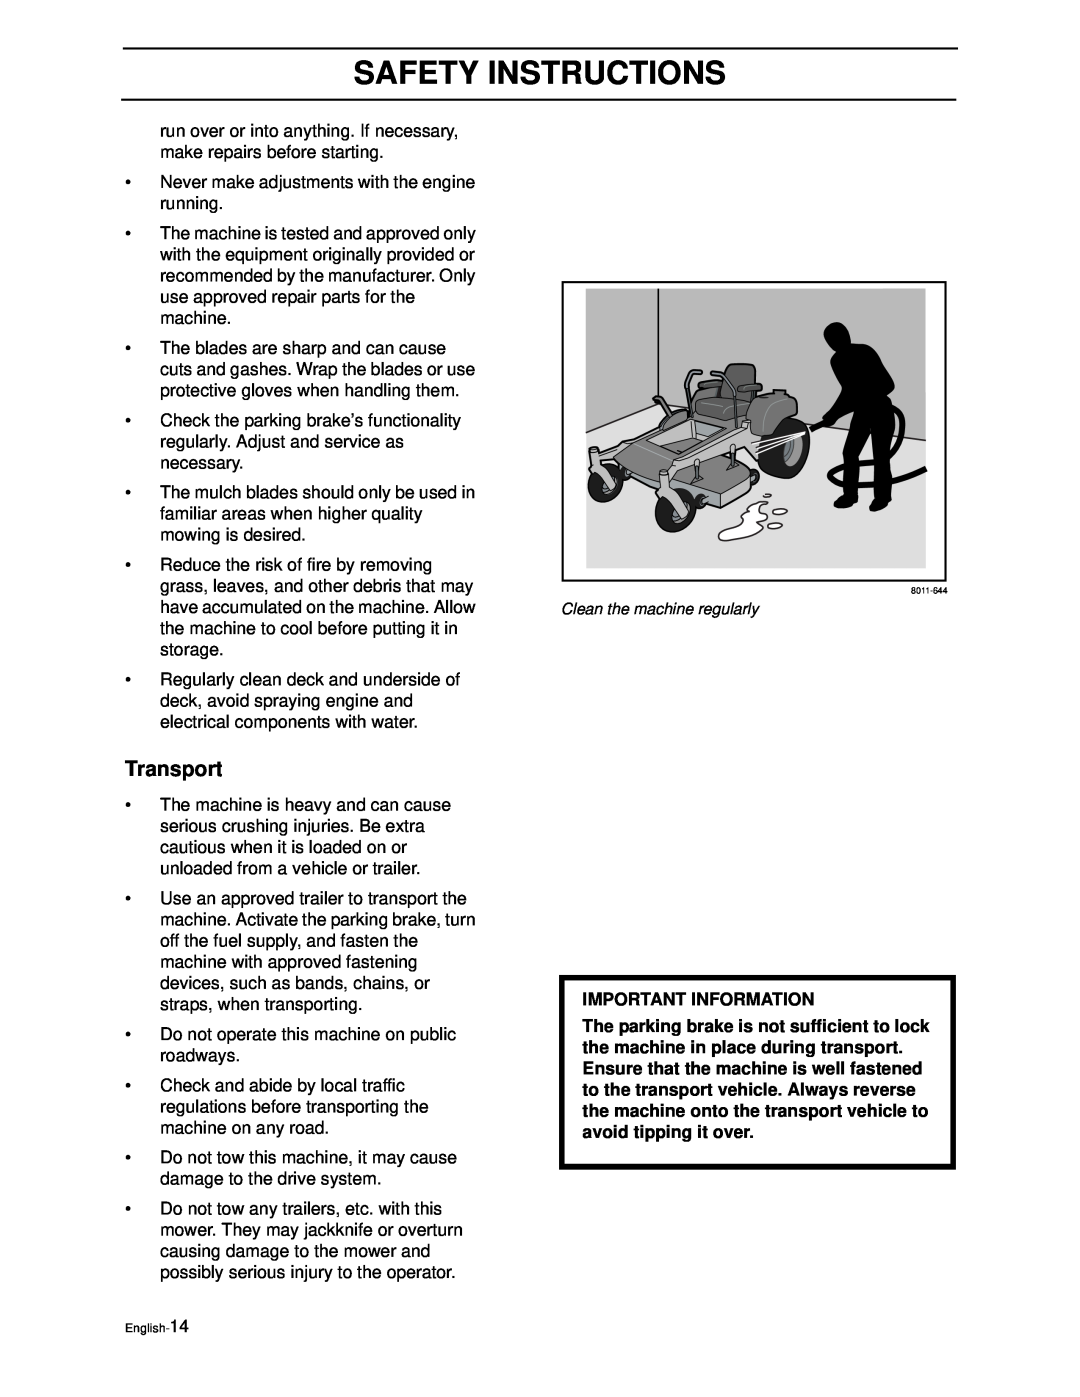 Poulan PZ4822 manual Transport, Safety Instructions, Important Information 